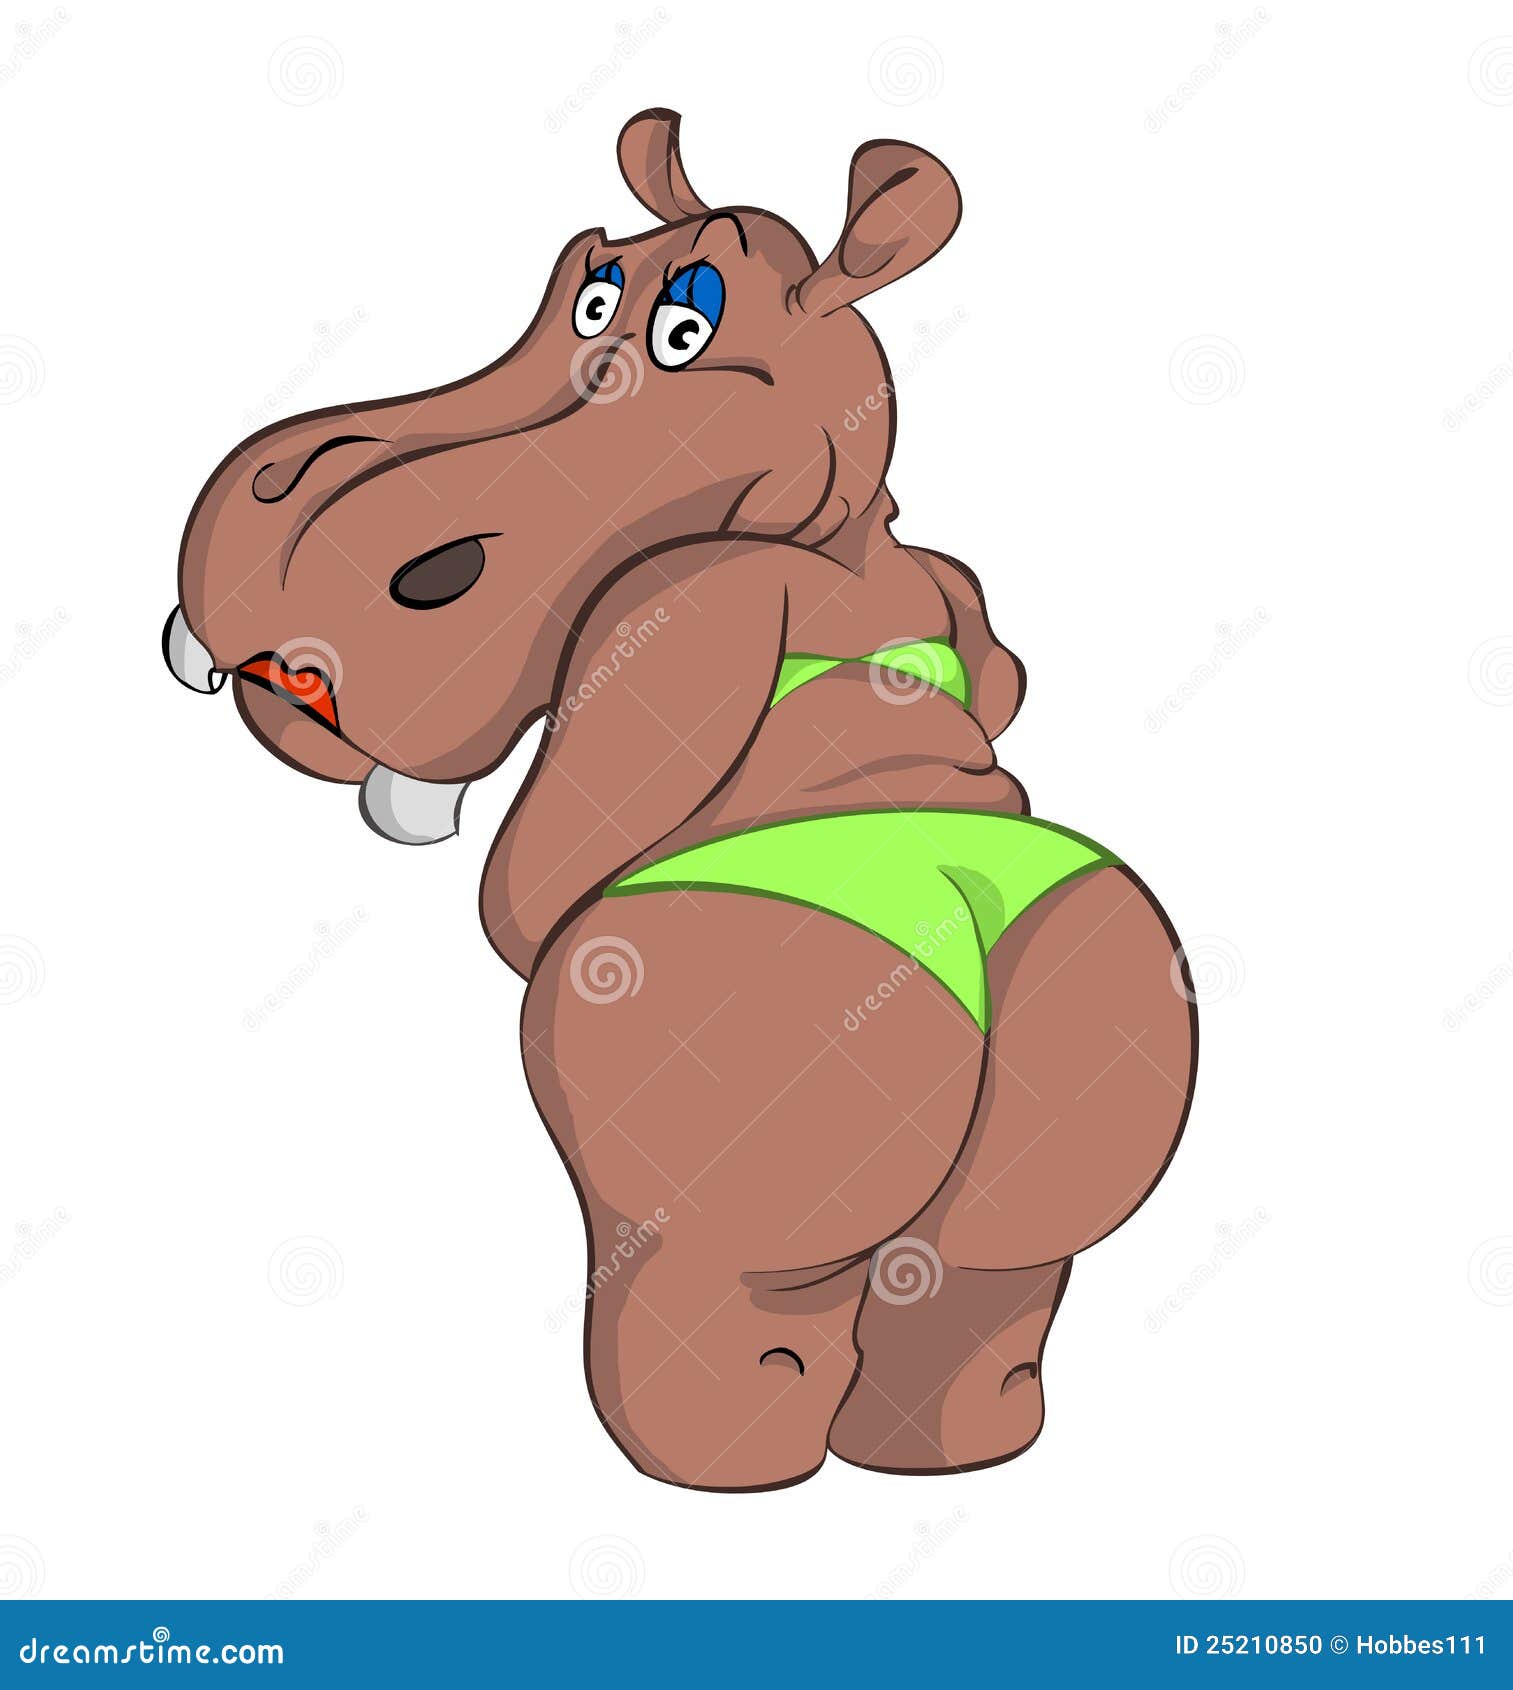 hippo swimsuit